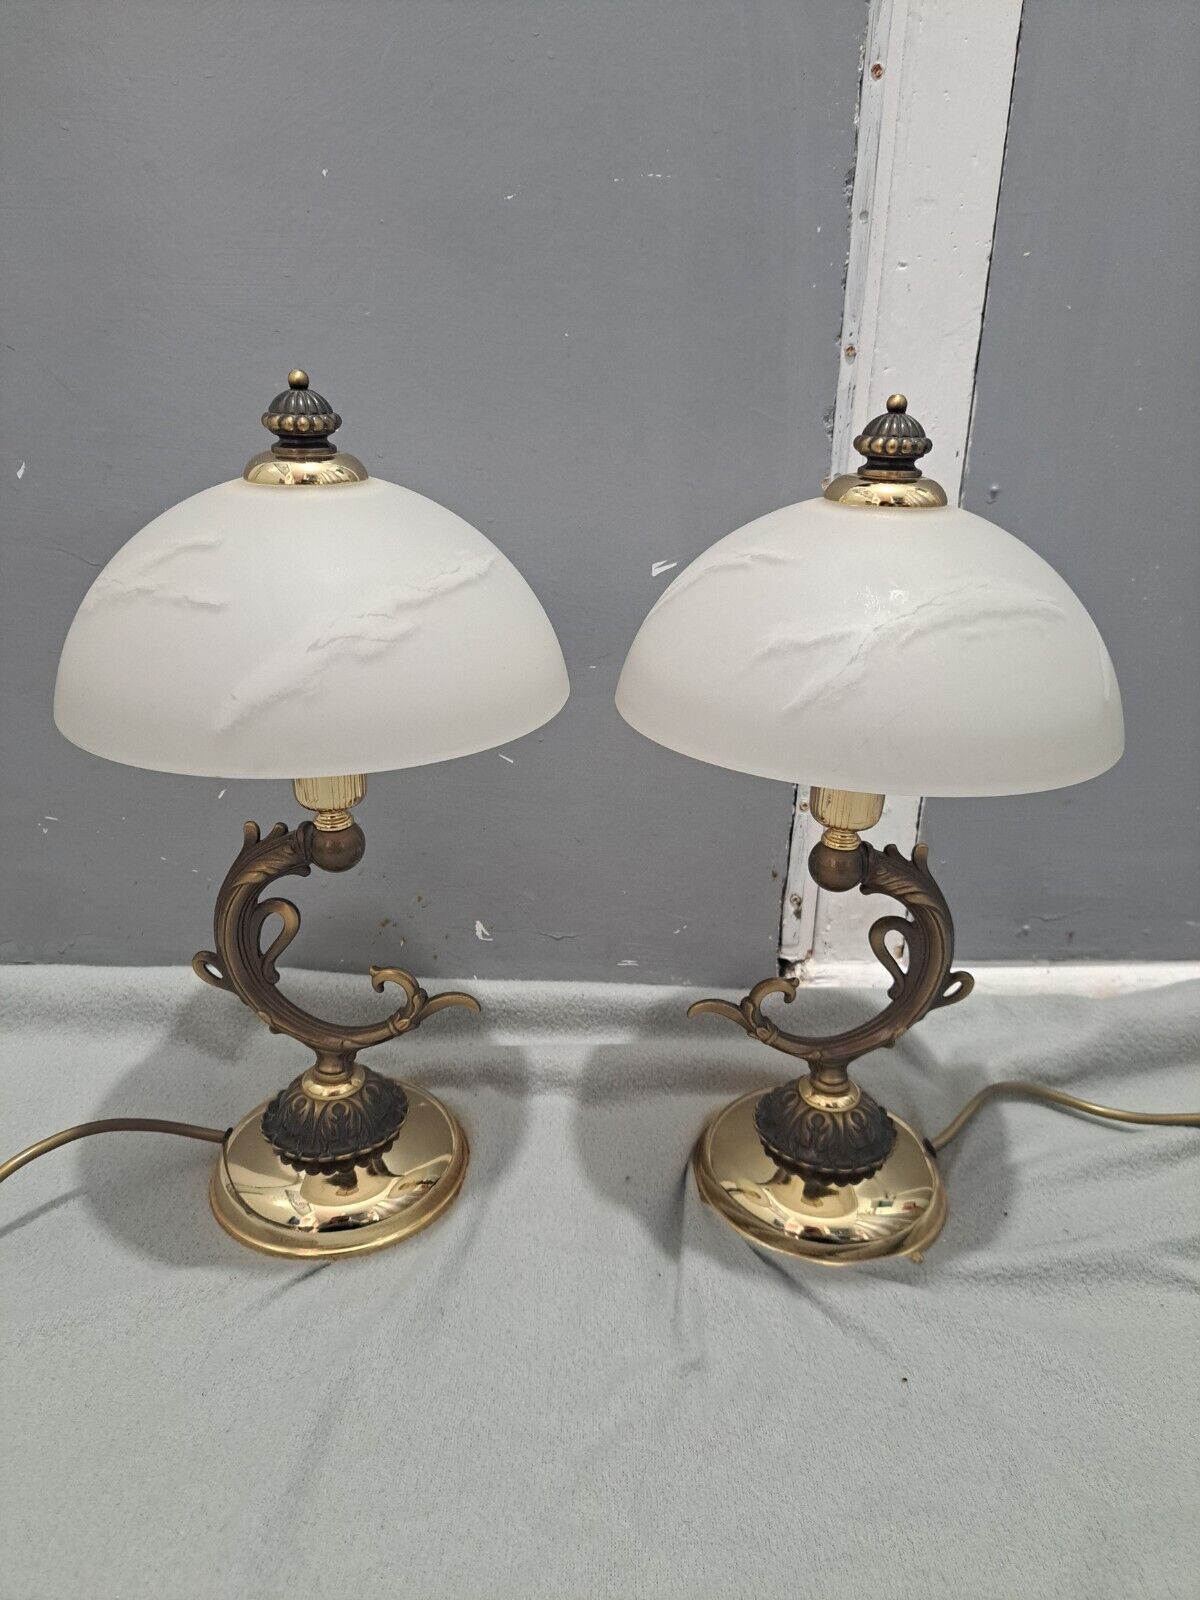 Bronceart Torrent Art Nouveau Style Vintage Table Lamps from Spain 1980s Pair